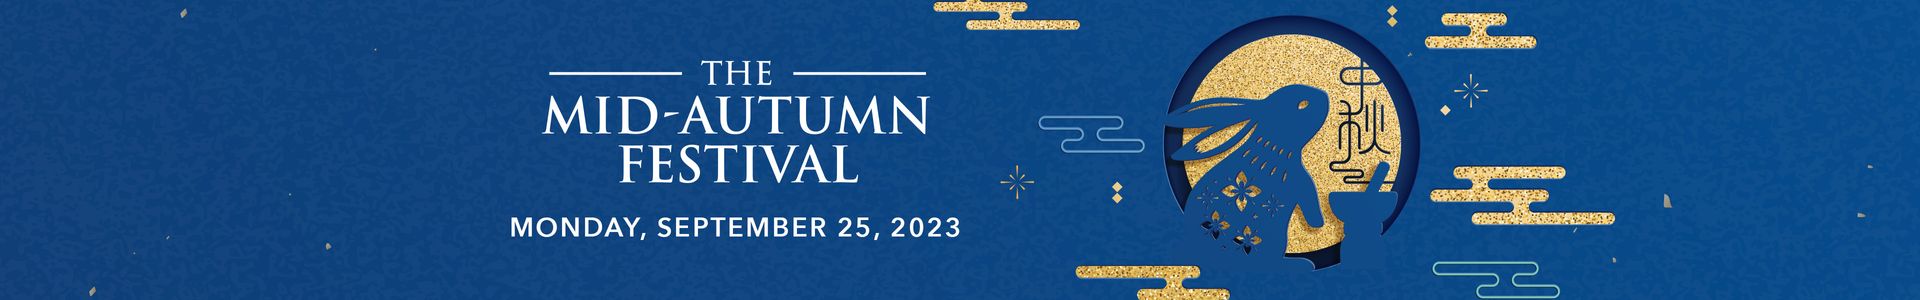 Mid-Autumn Festival Invitational